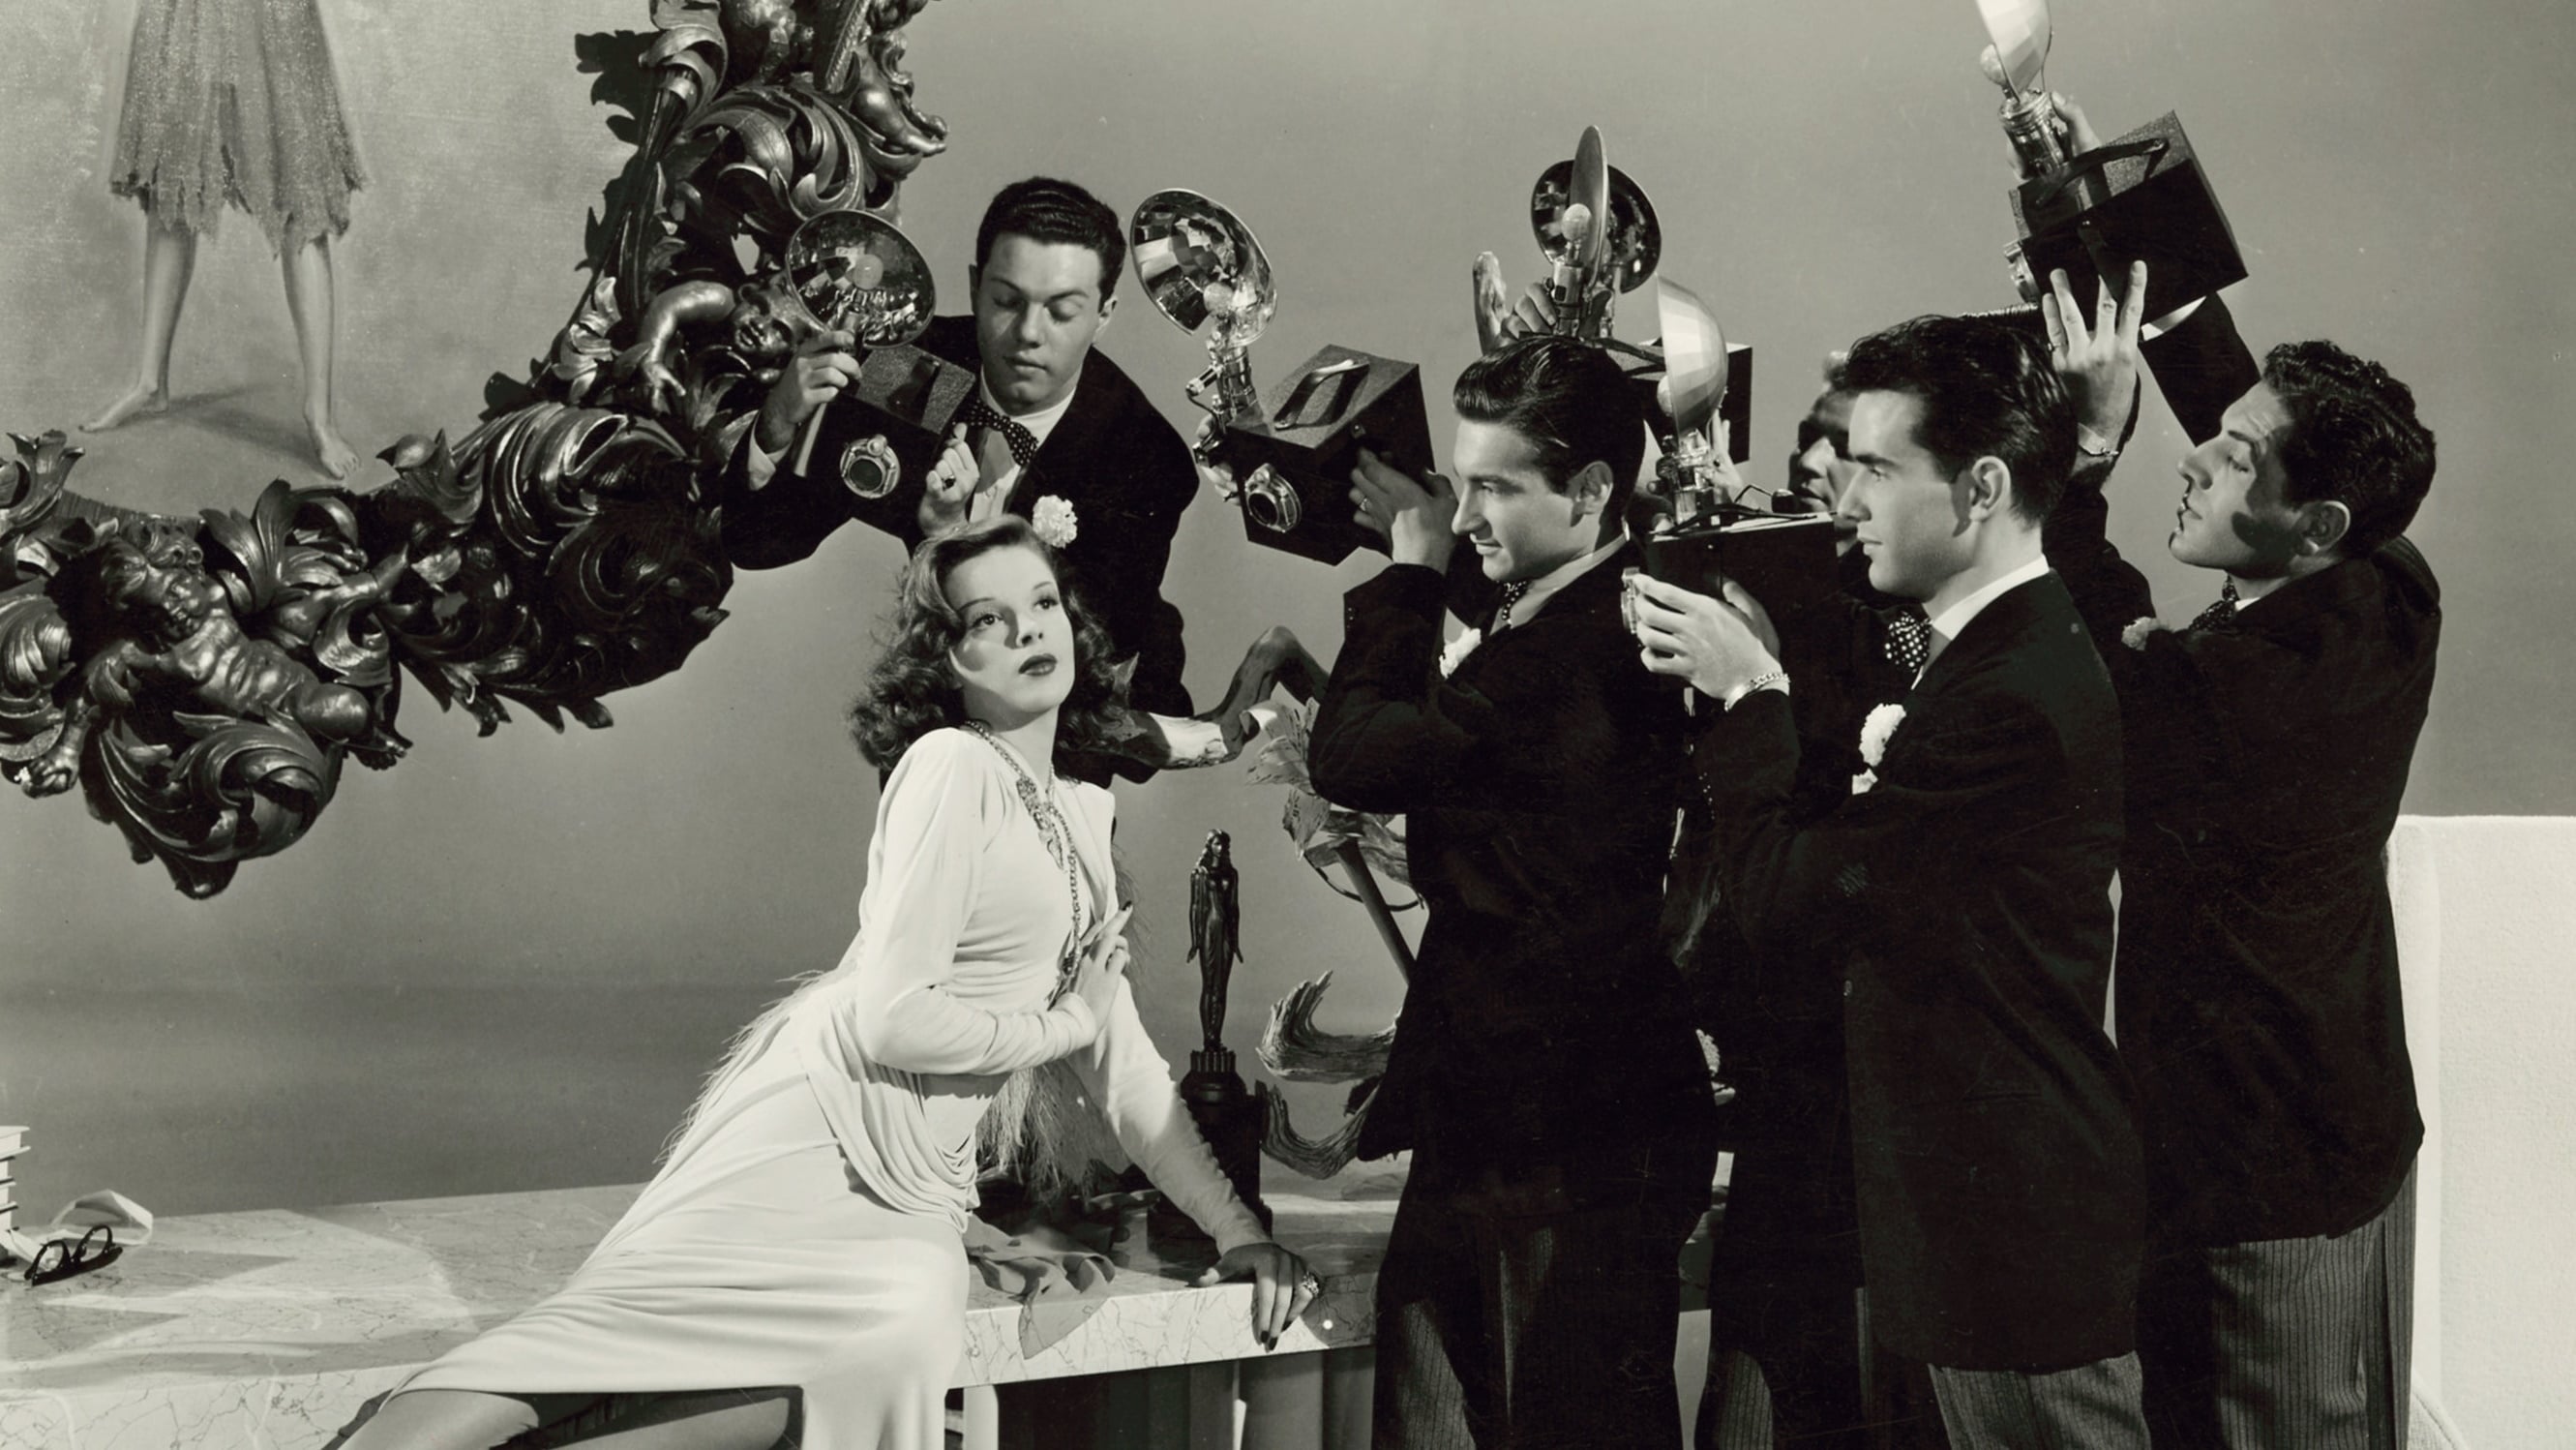 Image du film Ziegfeld Folies z0v44uzlmrokiqfx1gkdflulferjpg